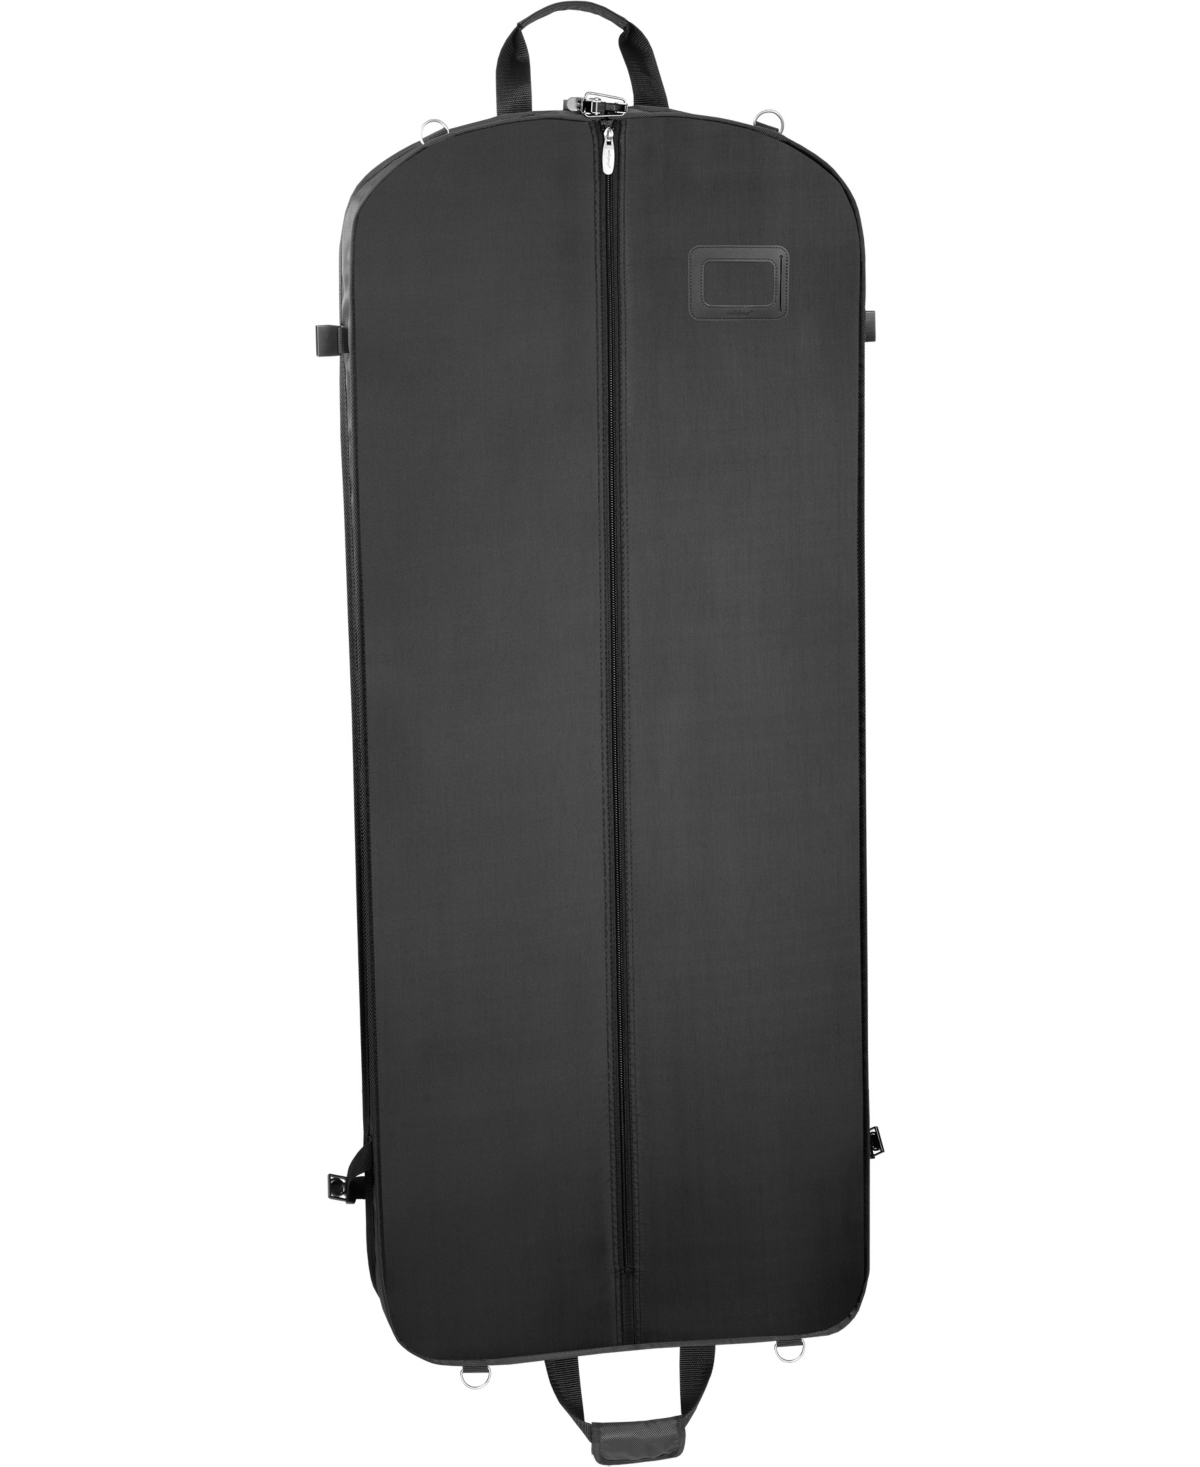 52" Premium Travel Garment Bag with Shoulder Strap and Two Large Pockets - Black